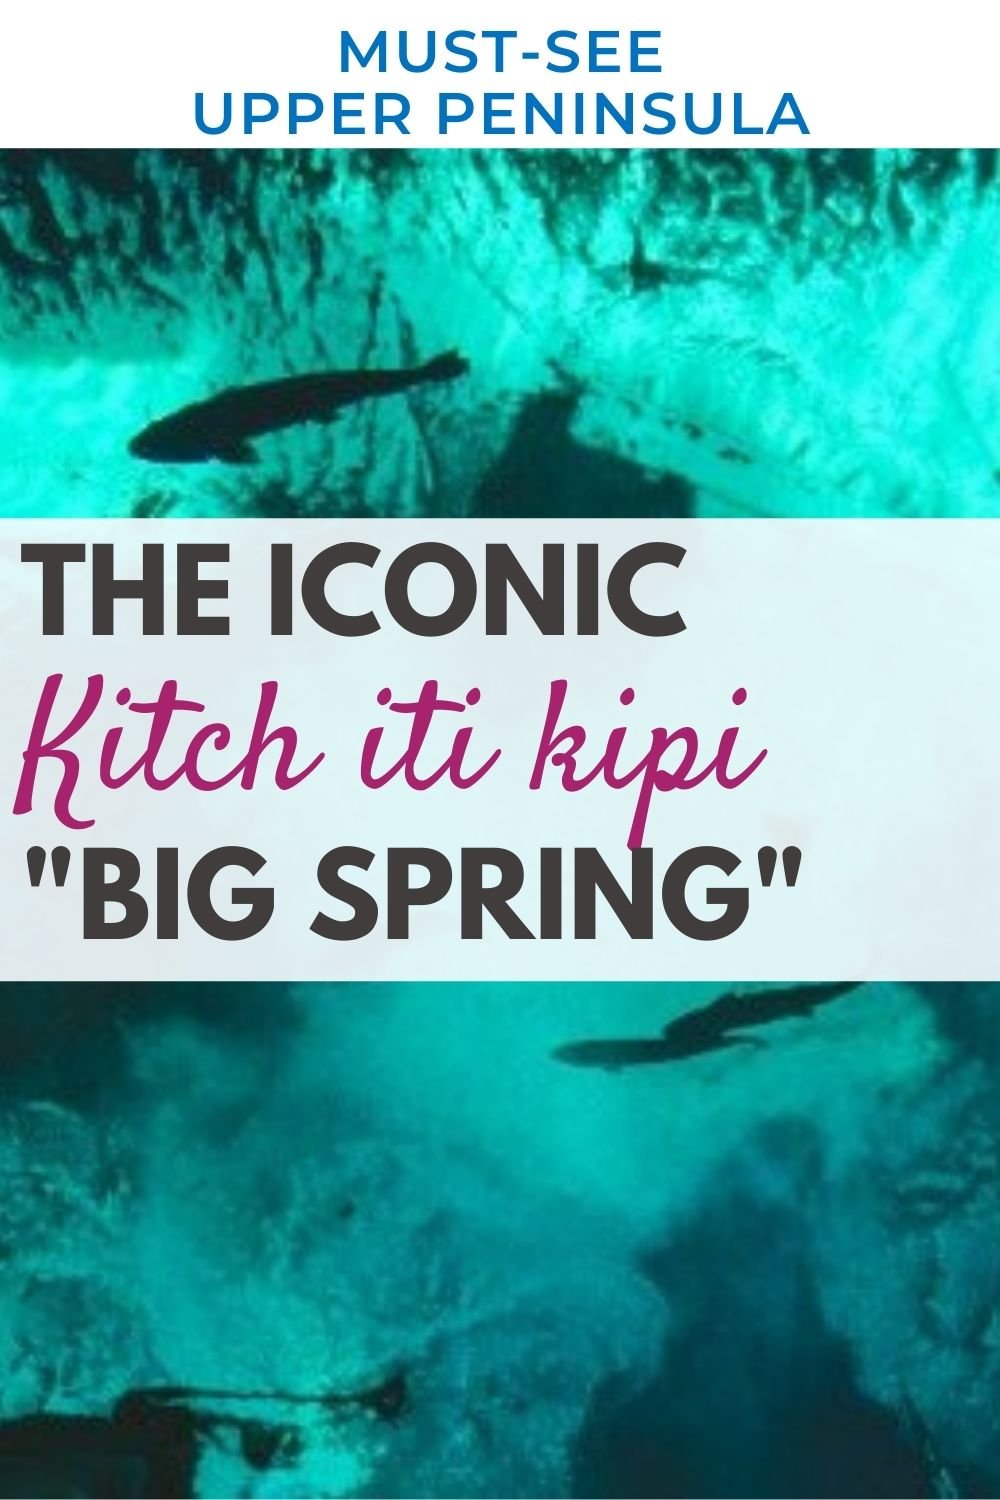 KITCH-ITI-KIPI Big Spring.jpg